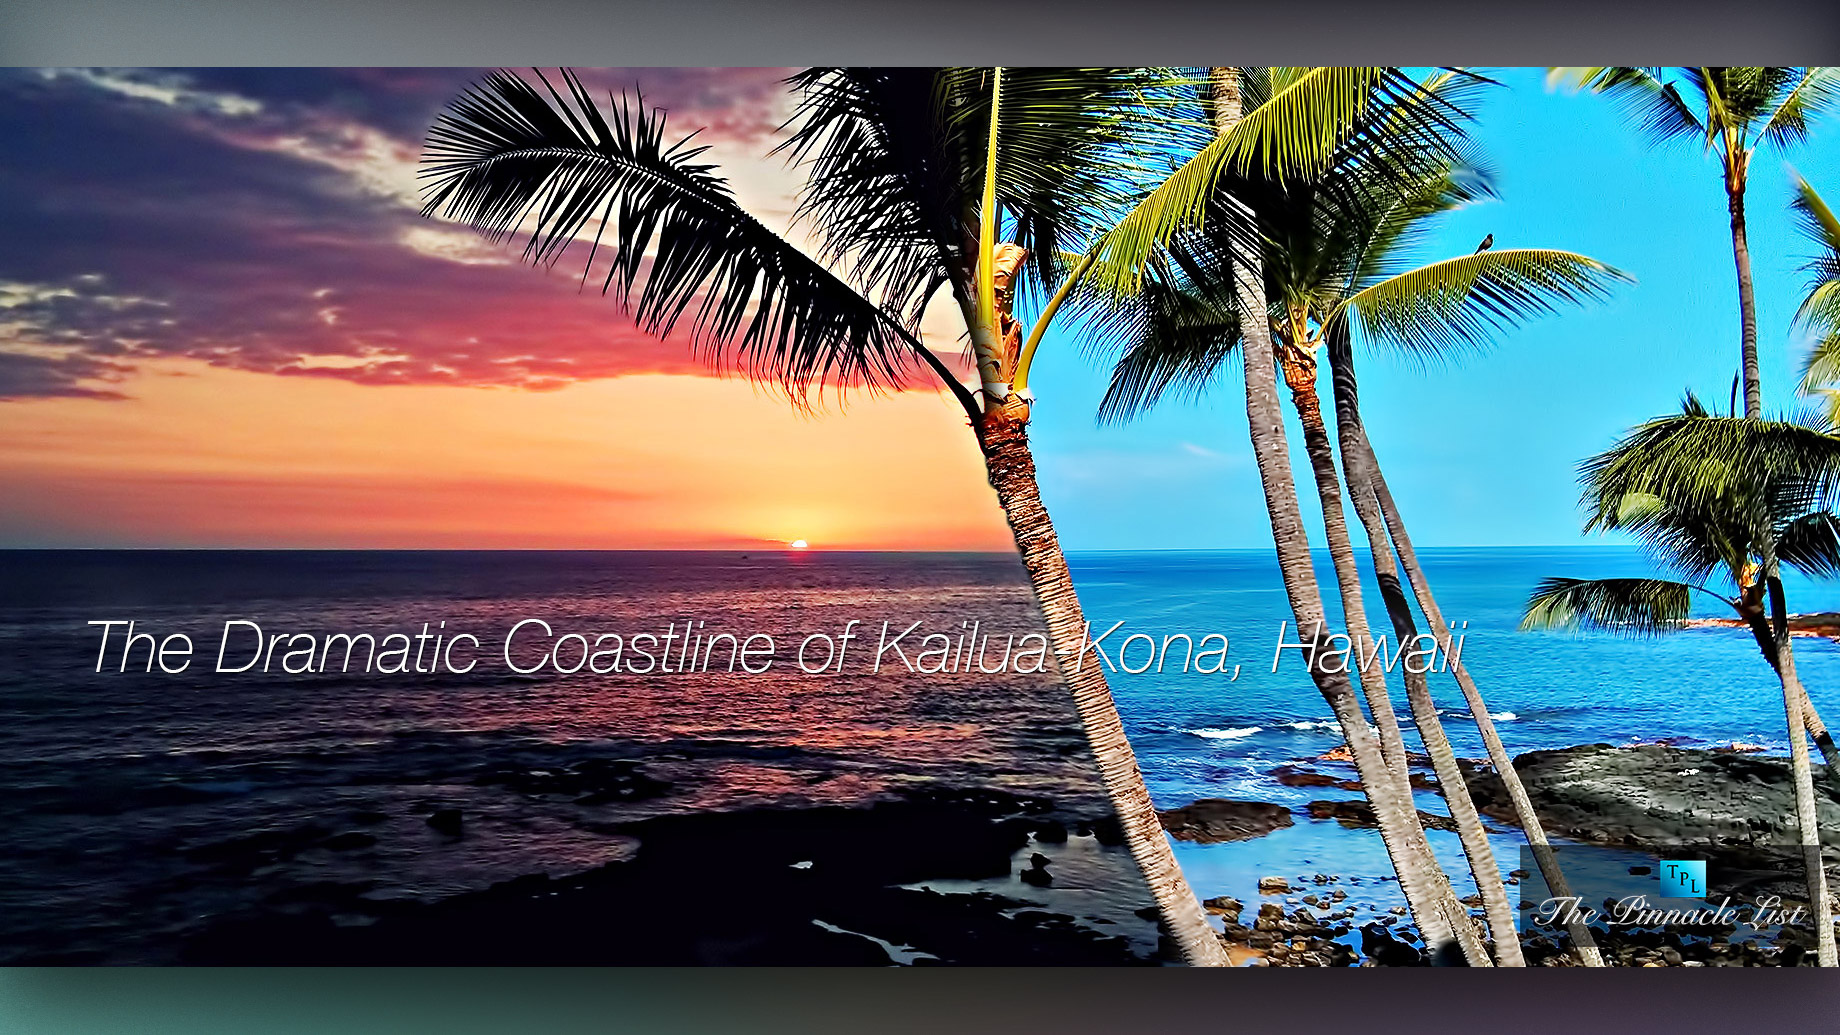 The Dramatic Coastline of Kailua-Kona, Hawaii